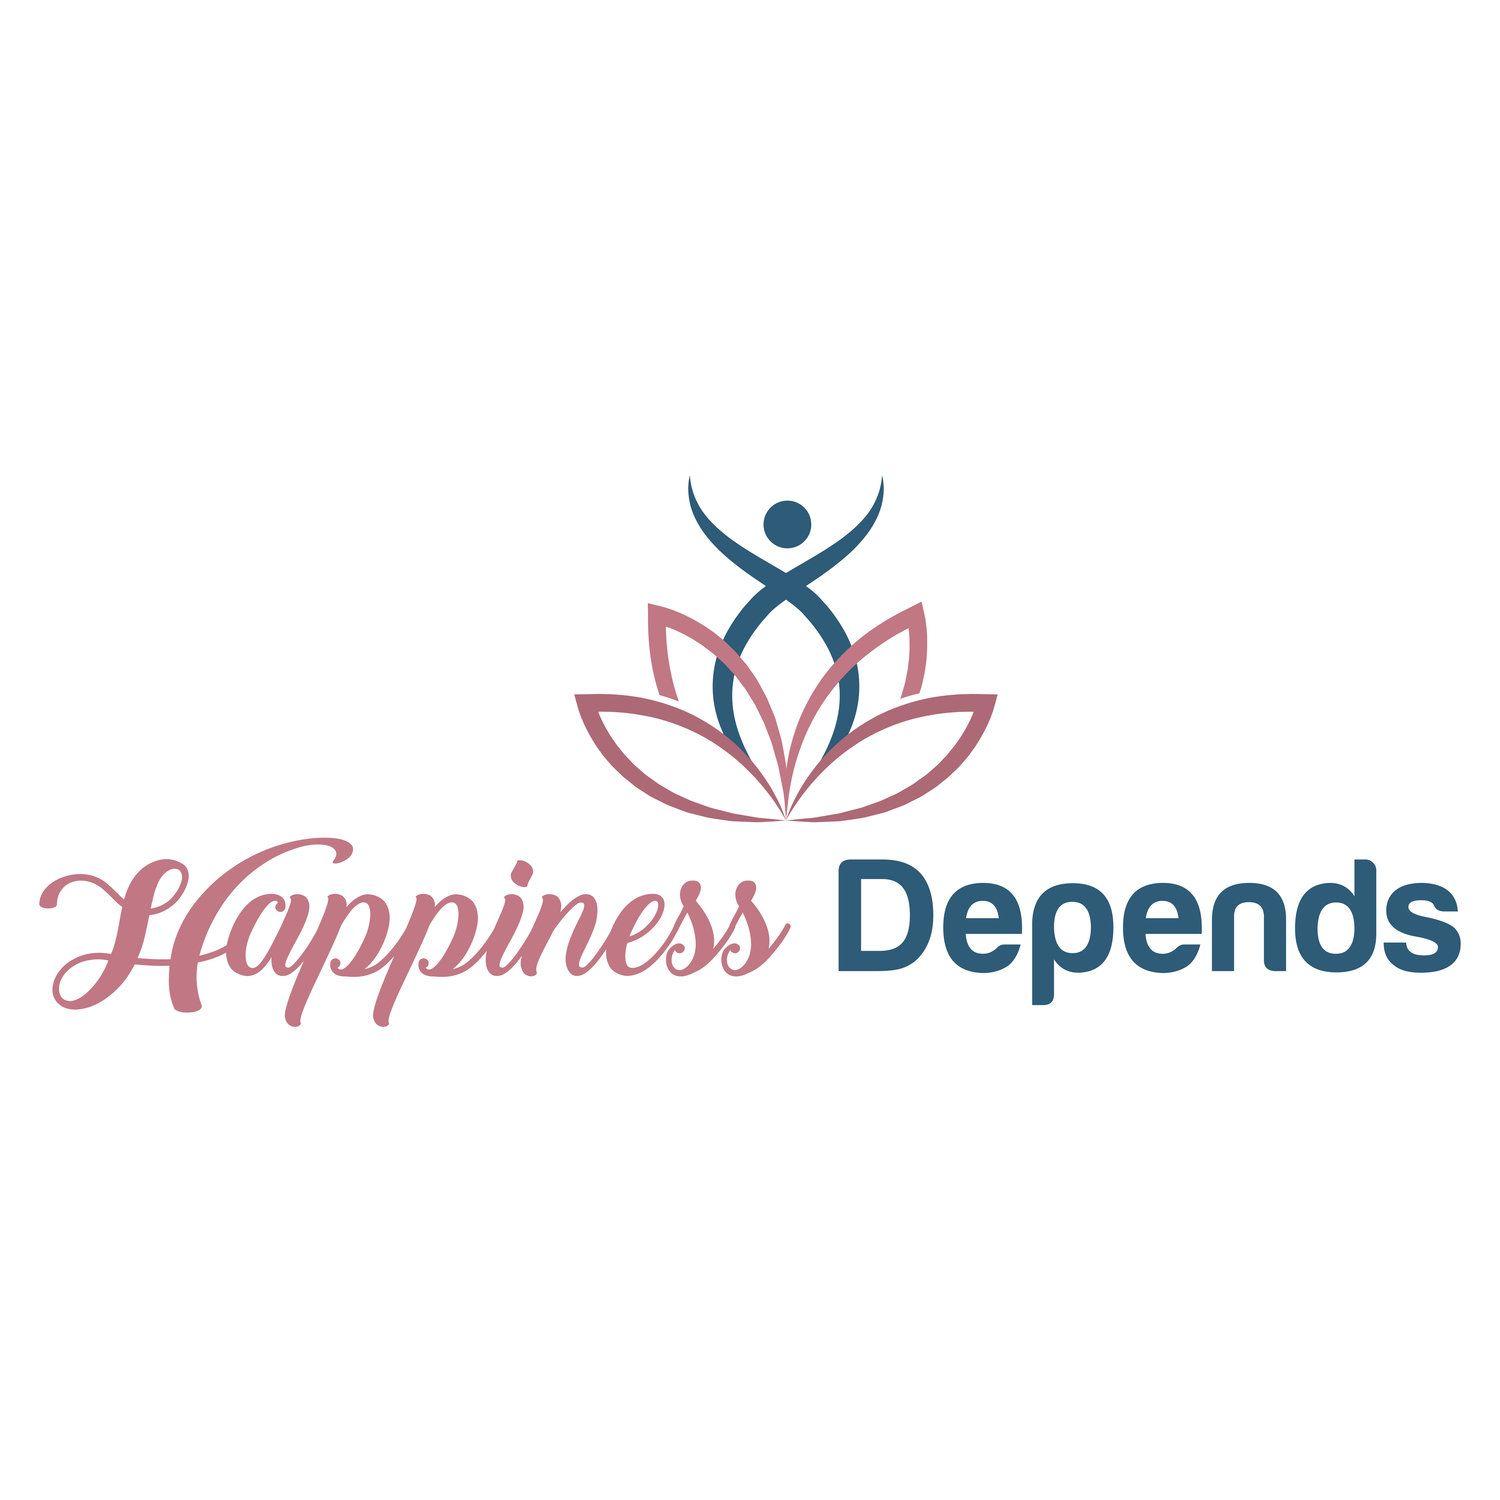 Depends Logo - Happiness Depends